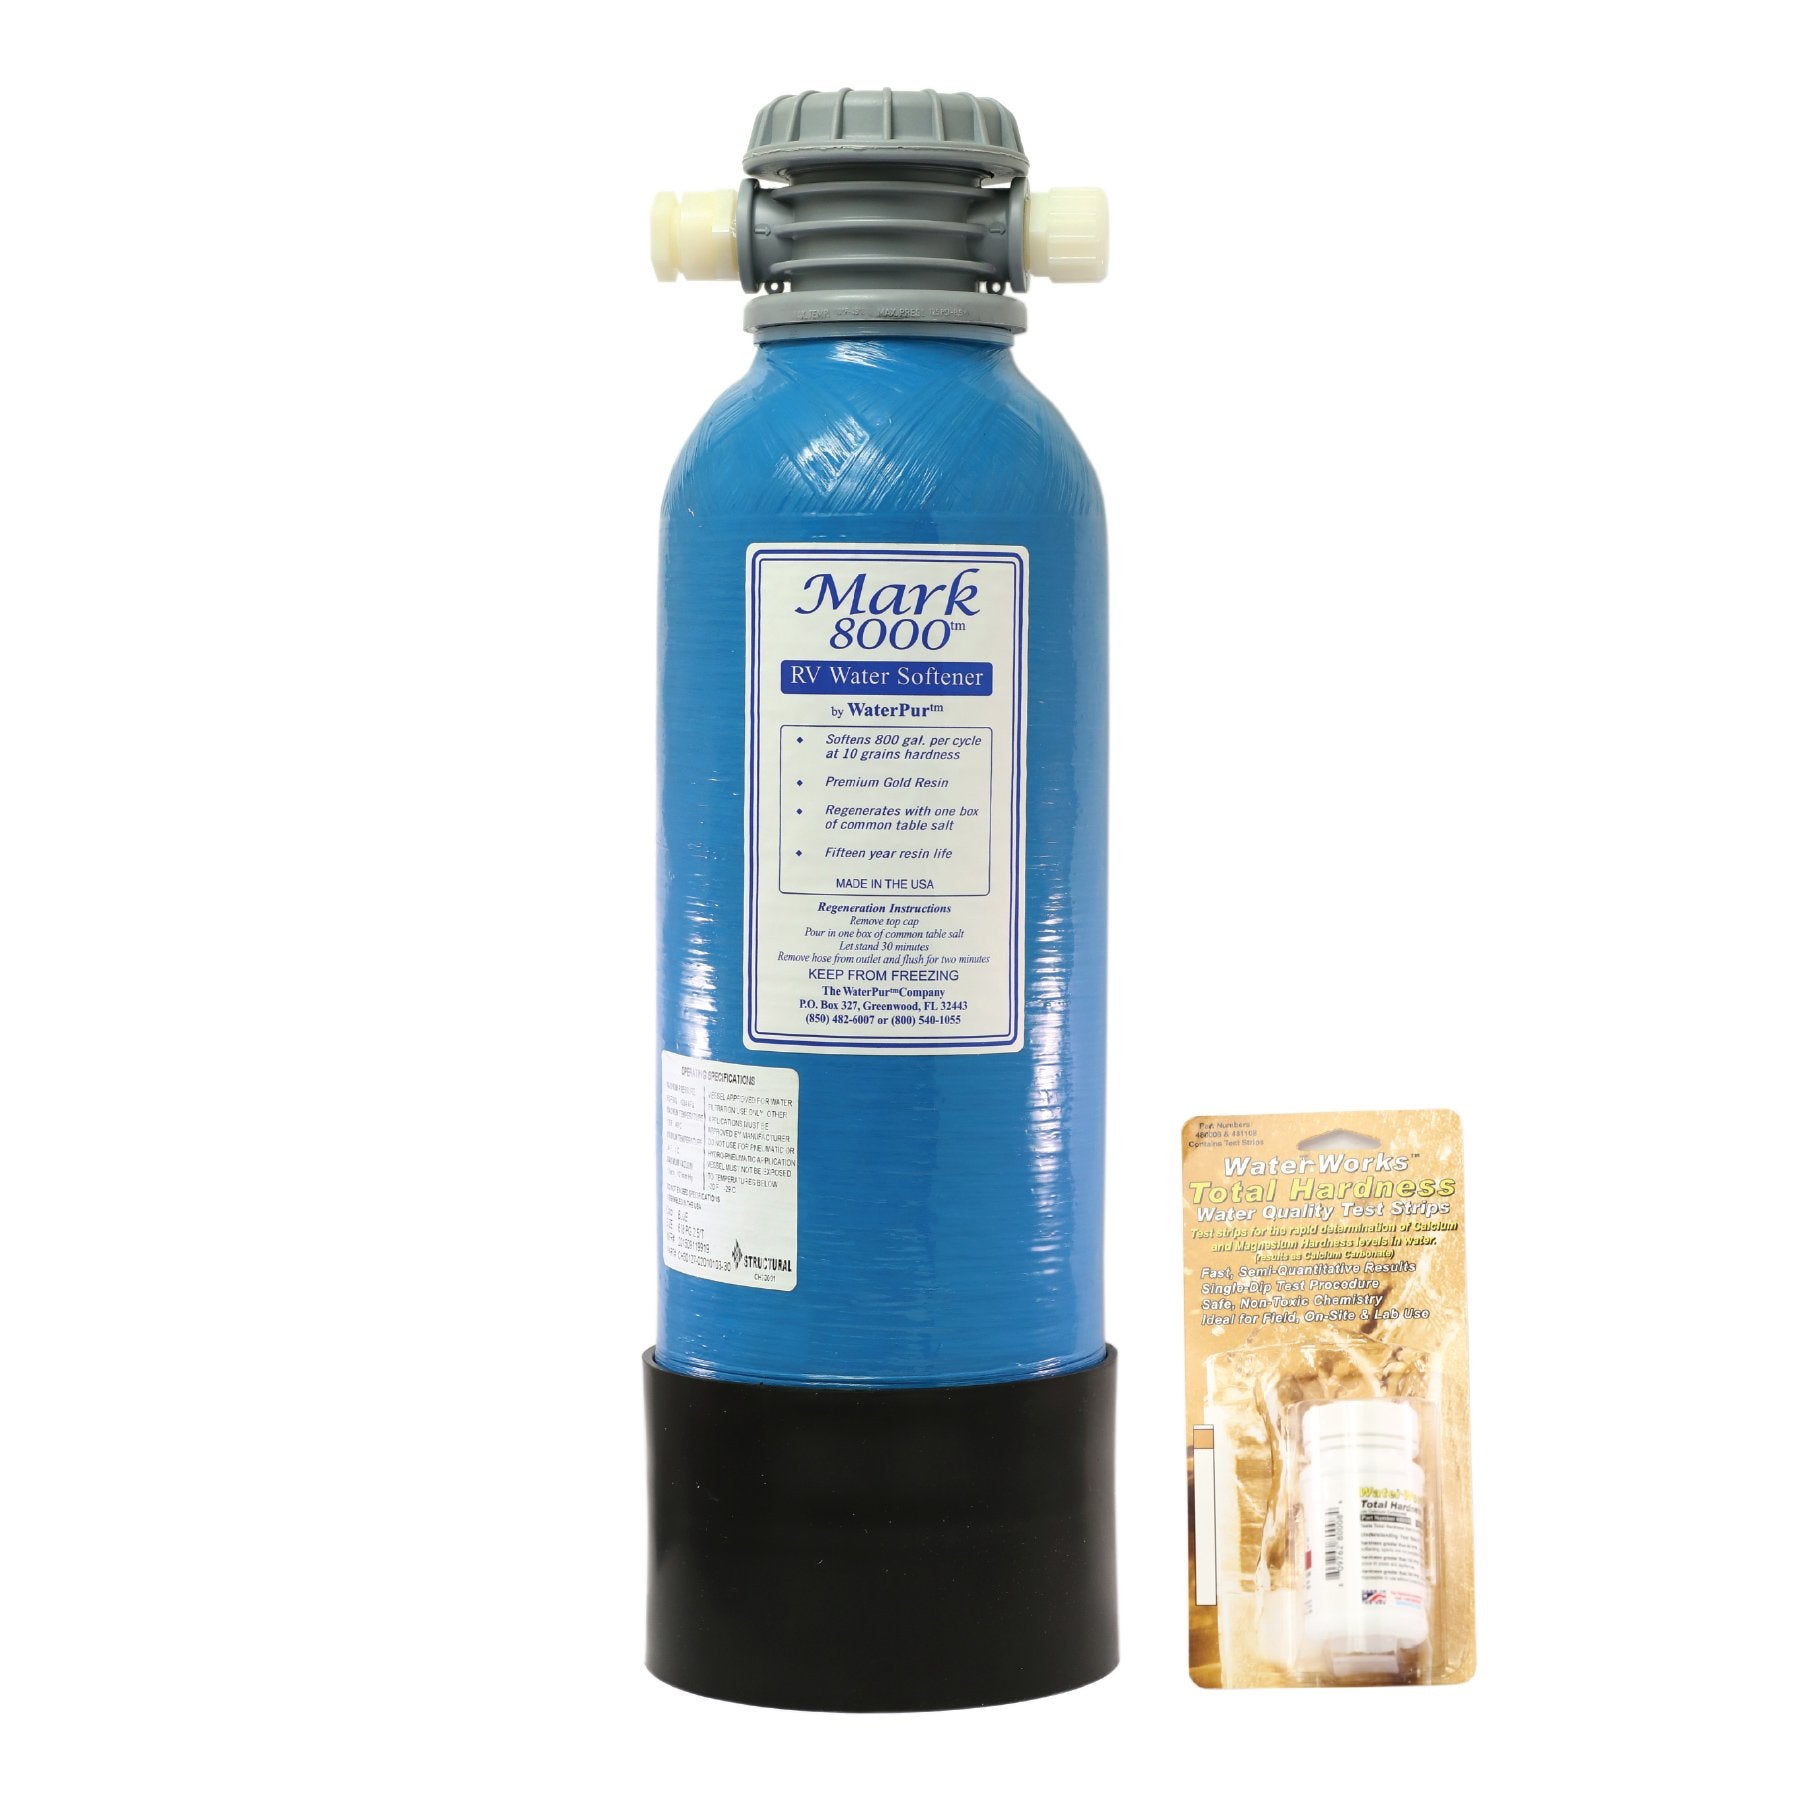 US Water Escort High Capacity Portable Water Softener